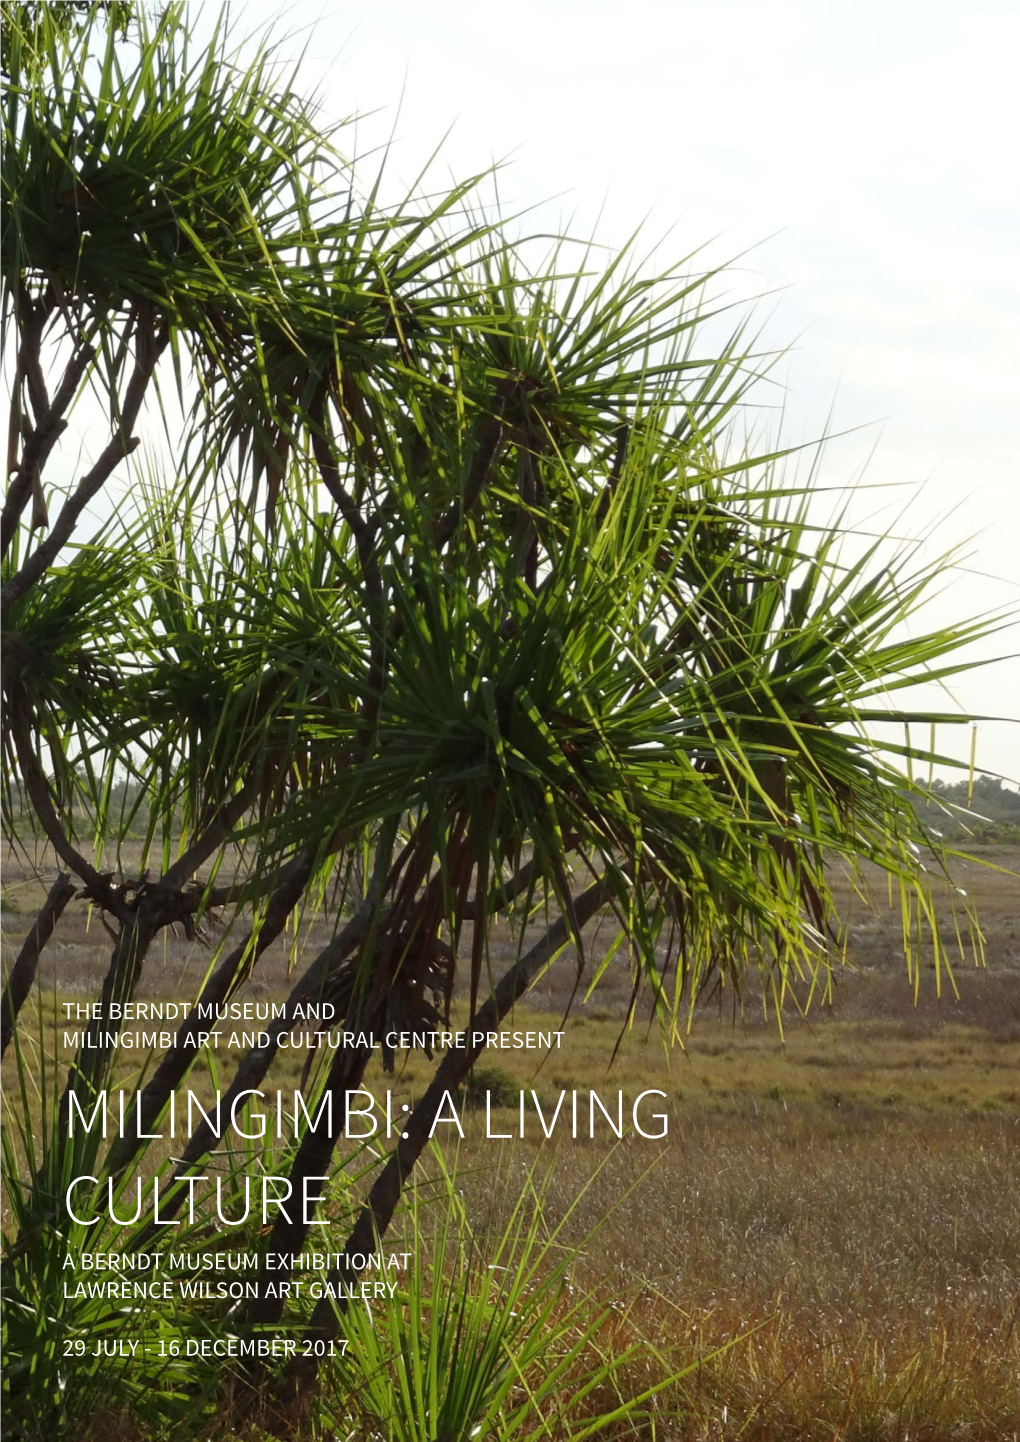 Milingimbi: a Living Culture a Berndt Museum Exhibition at Lawrence Wilson Art Gallery